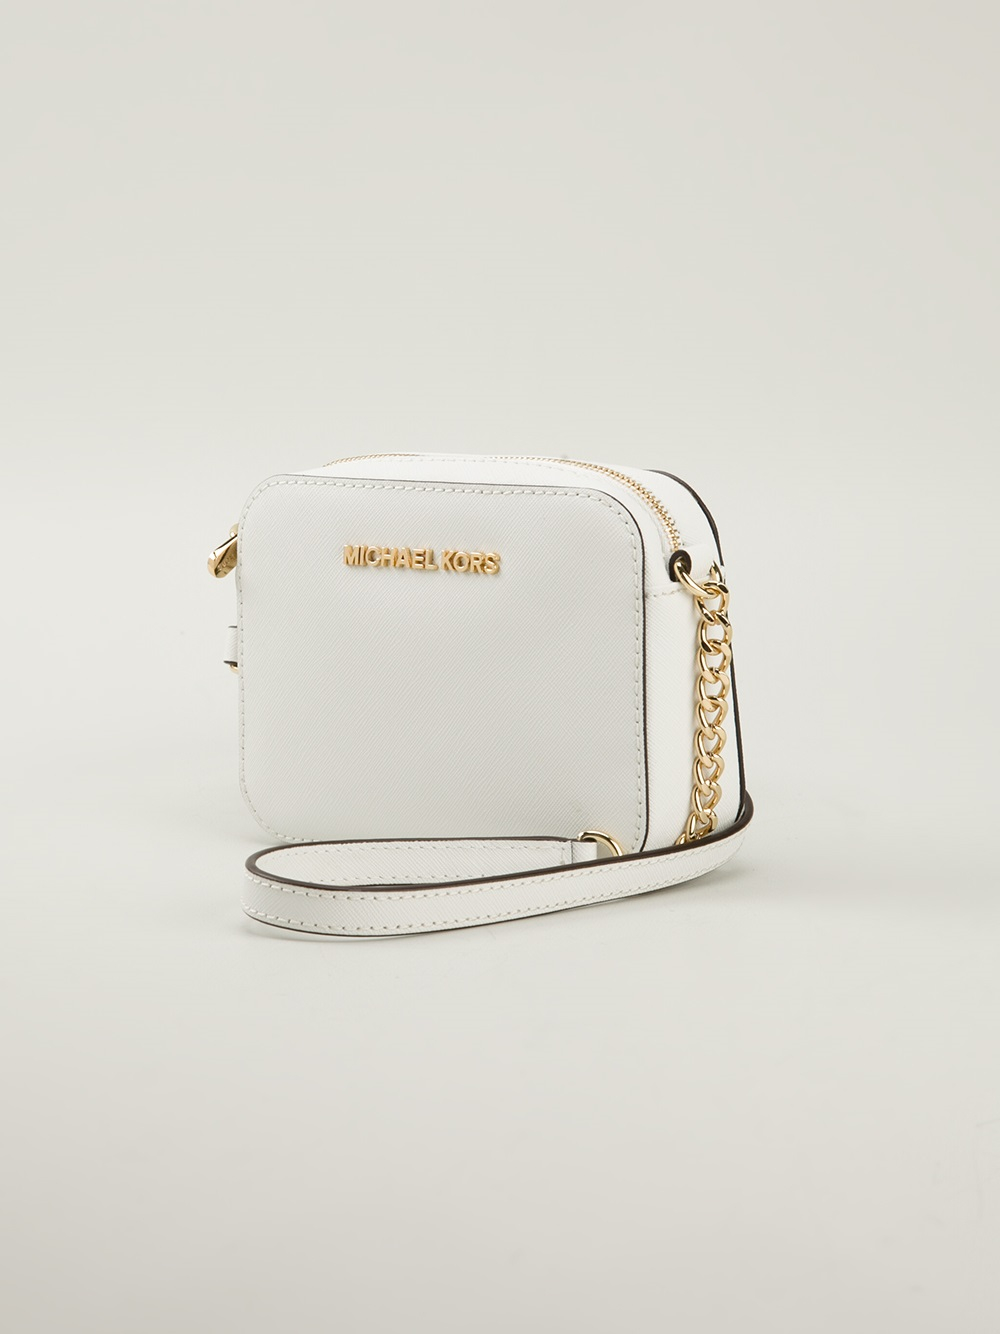 Michael Kors Handbags In White | semashow.com